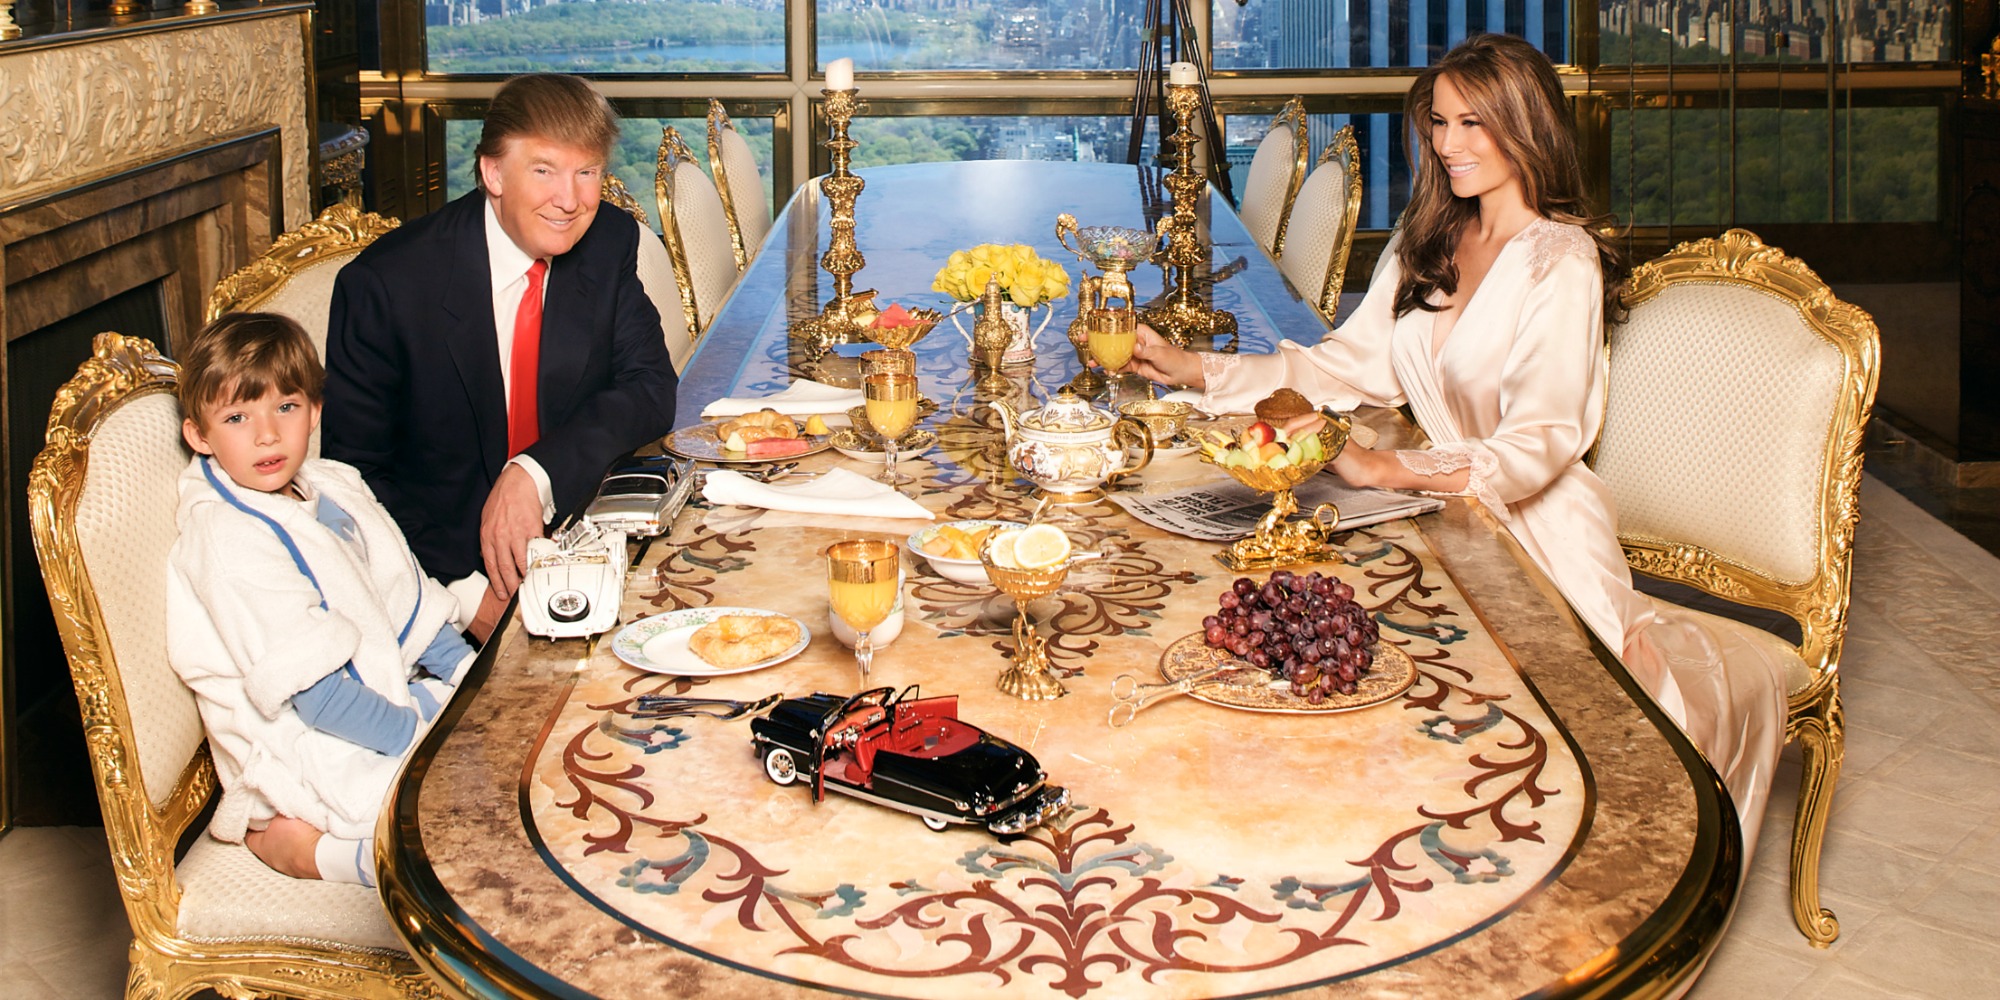 Celebrity Donald Trump HD Wallpaper | Background Image